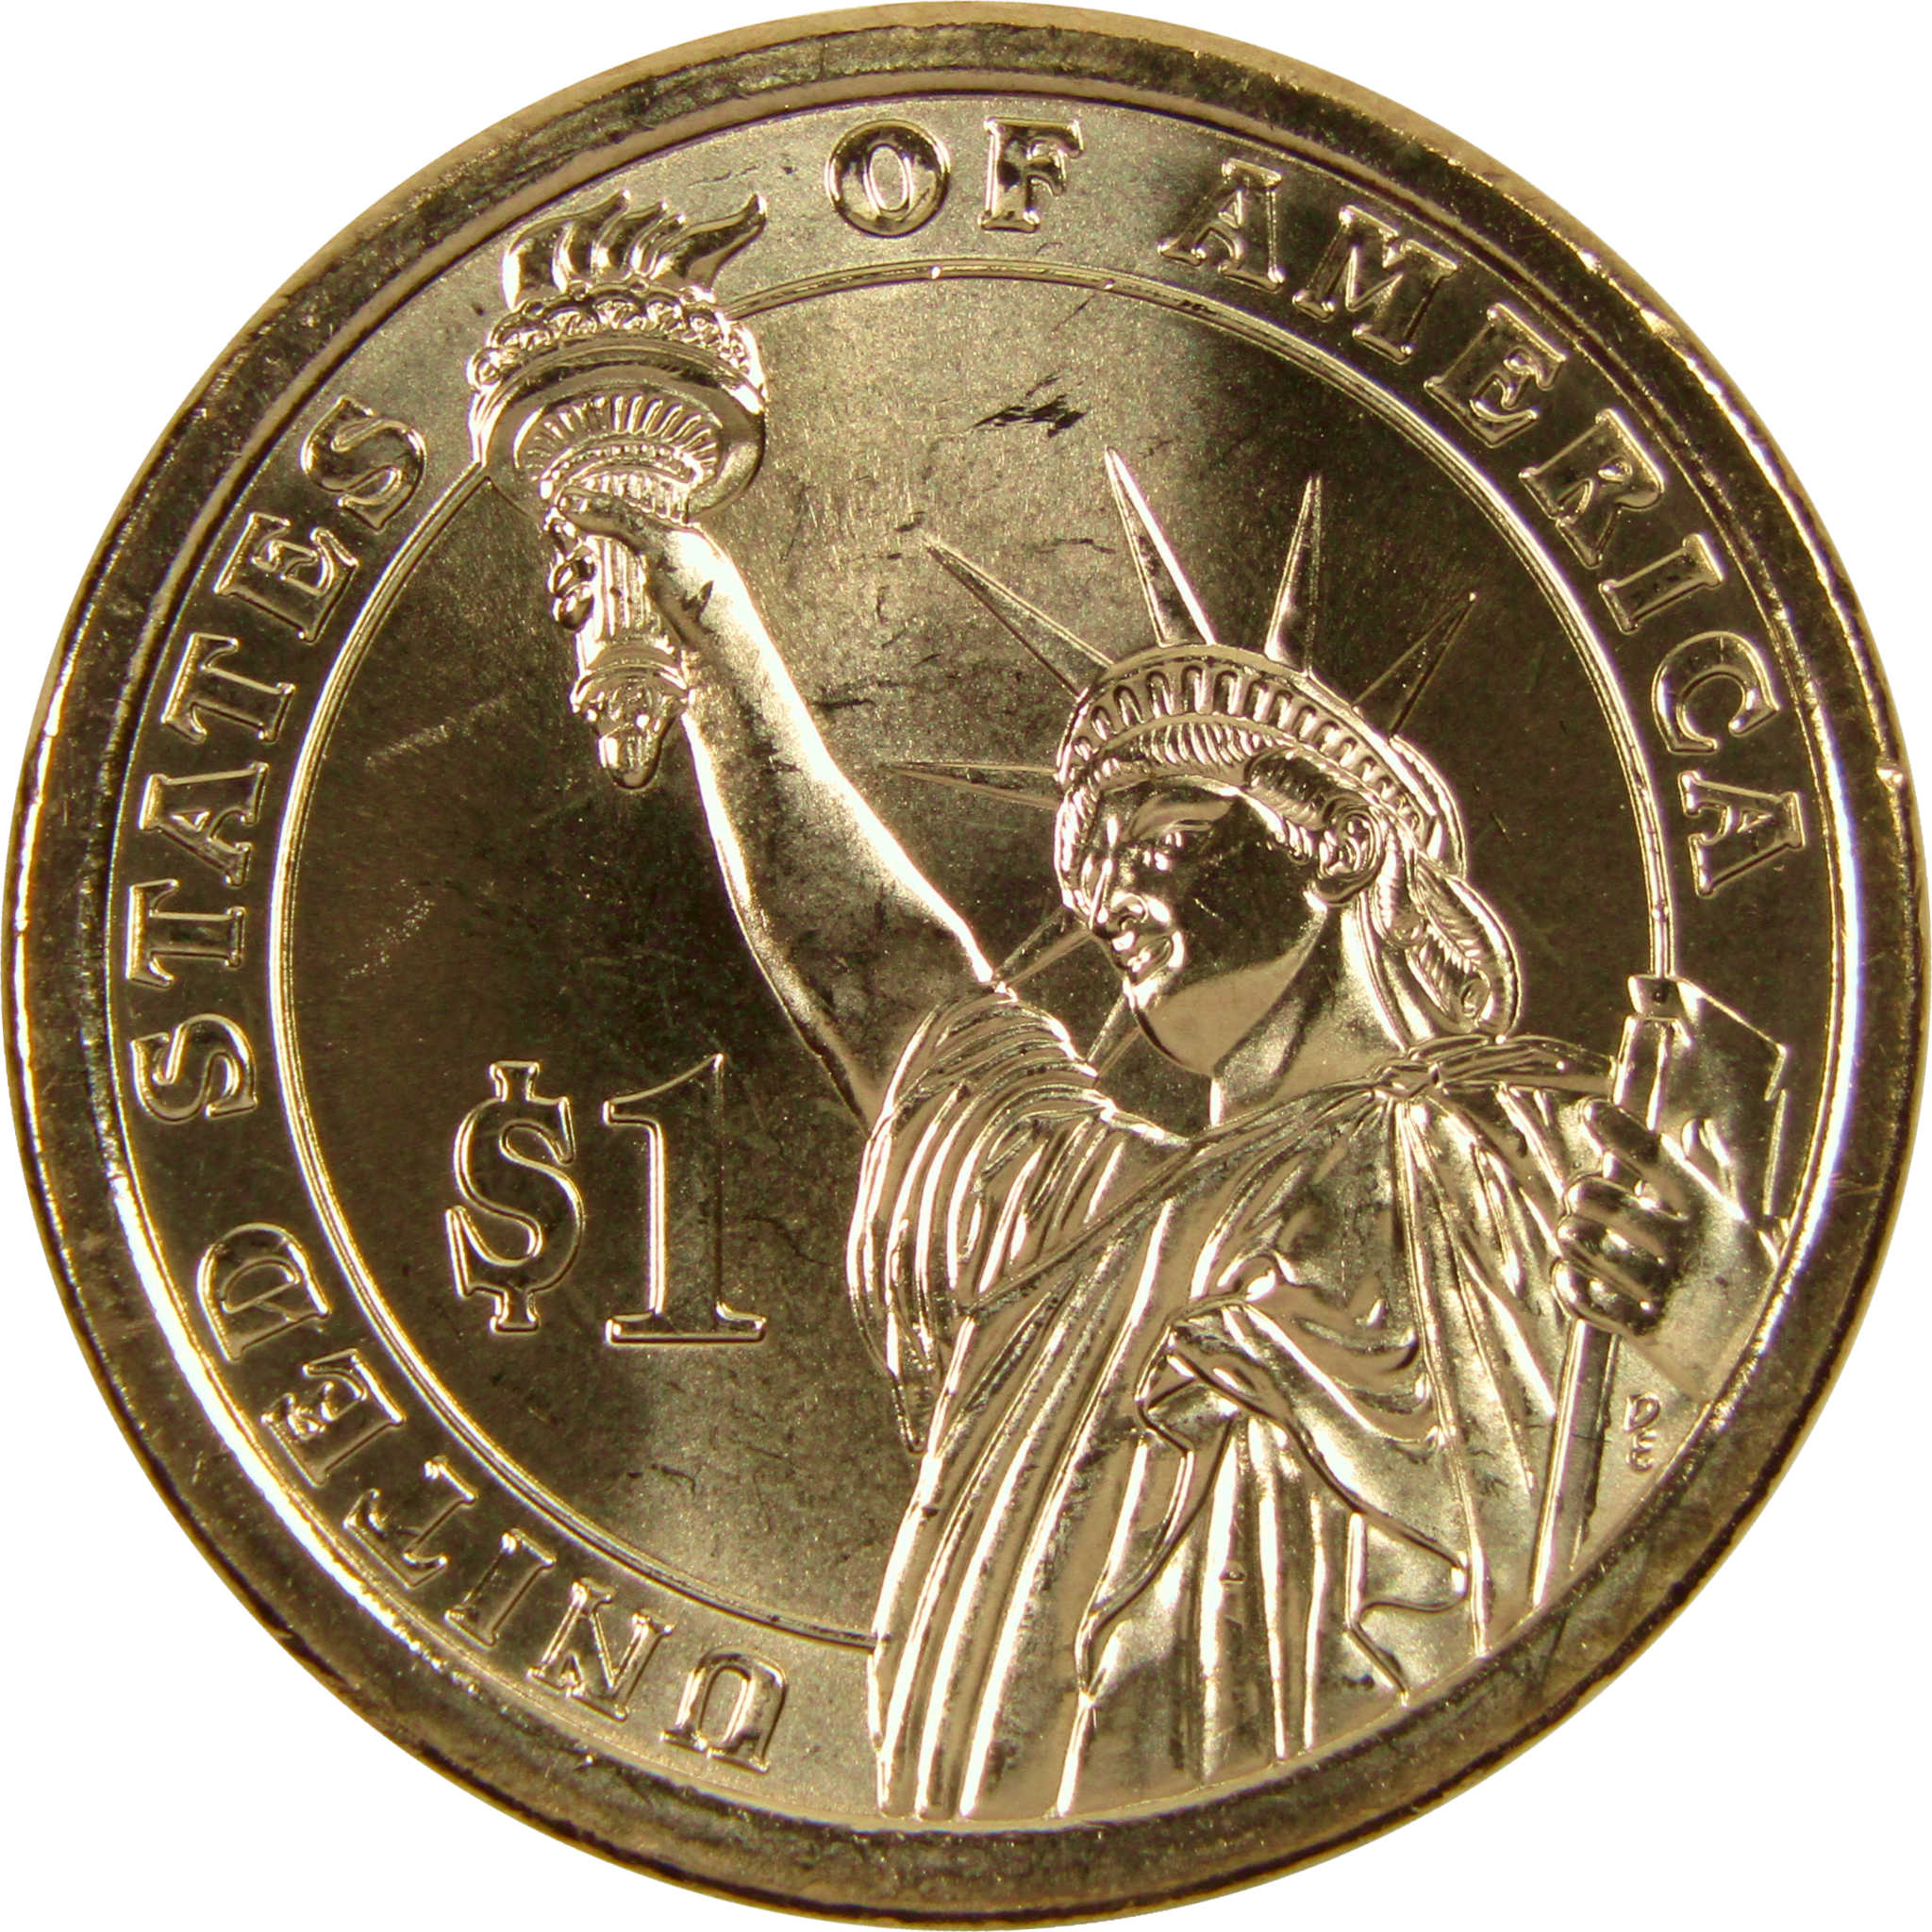 2008 D Martin Van Buren Presidential Dollar BU Uncirculated $1 Coin